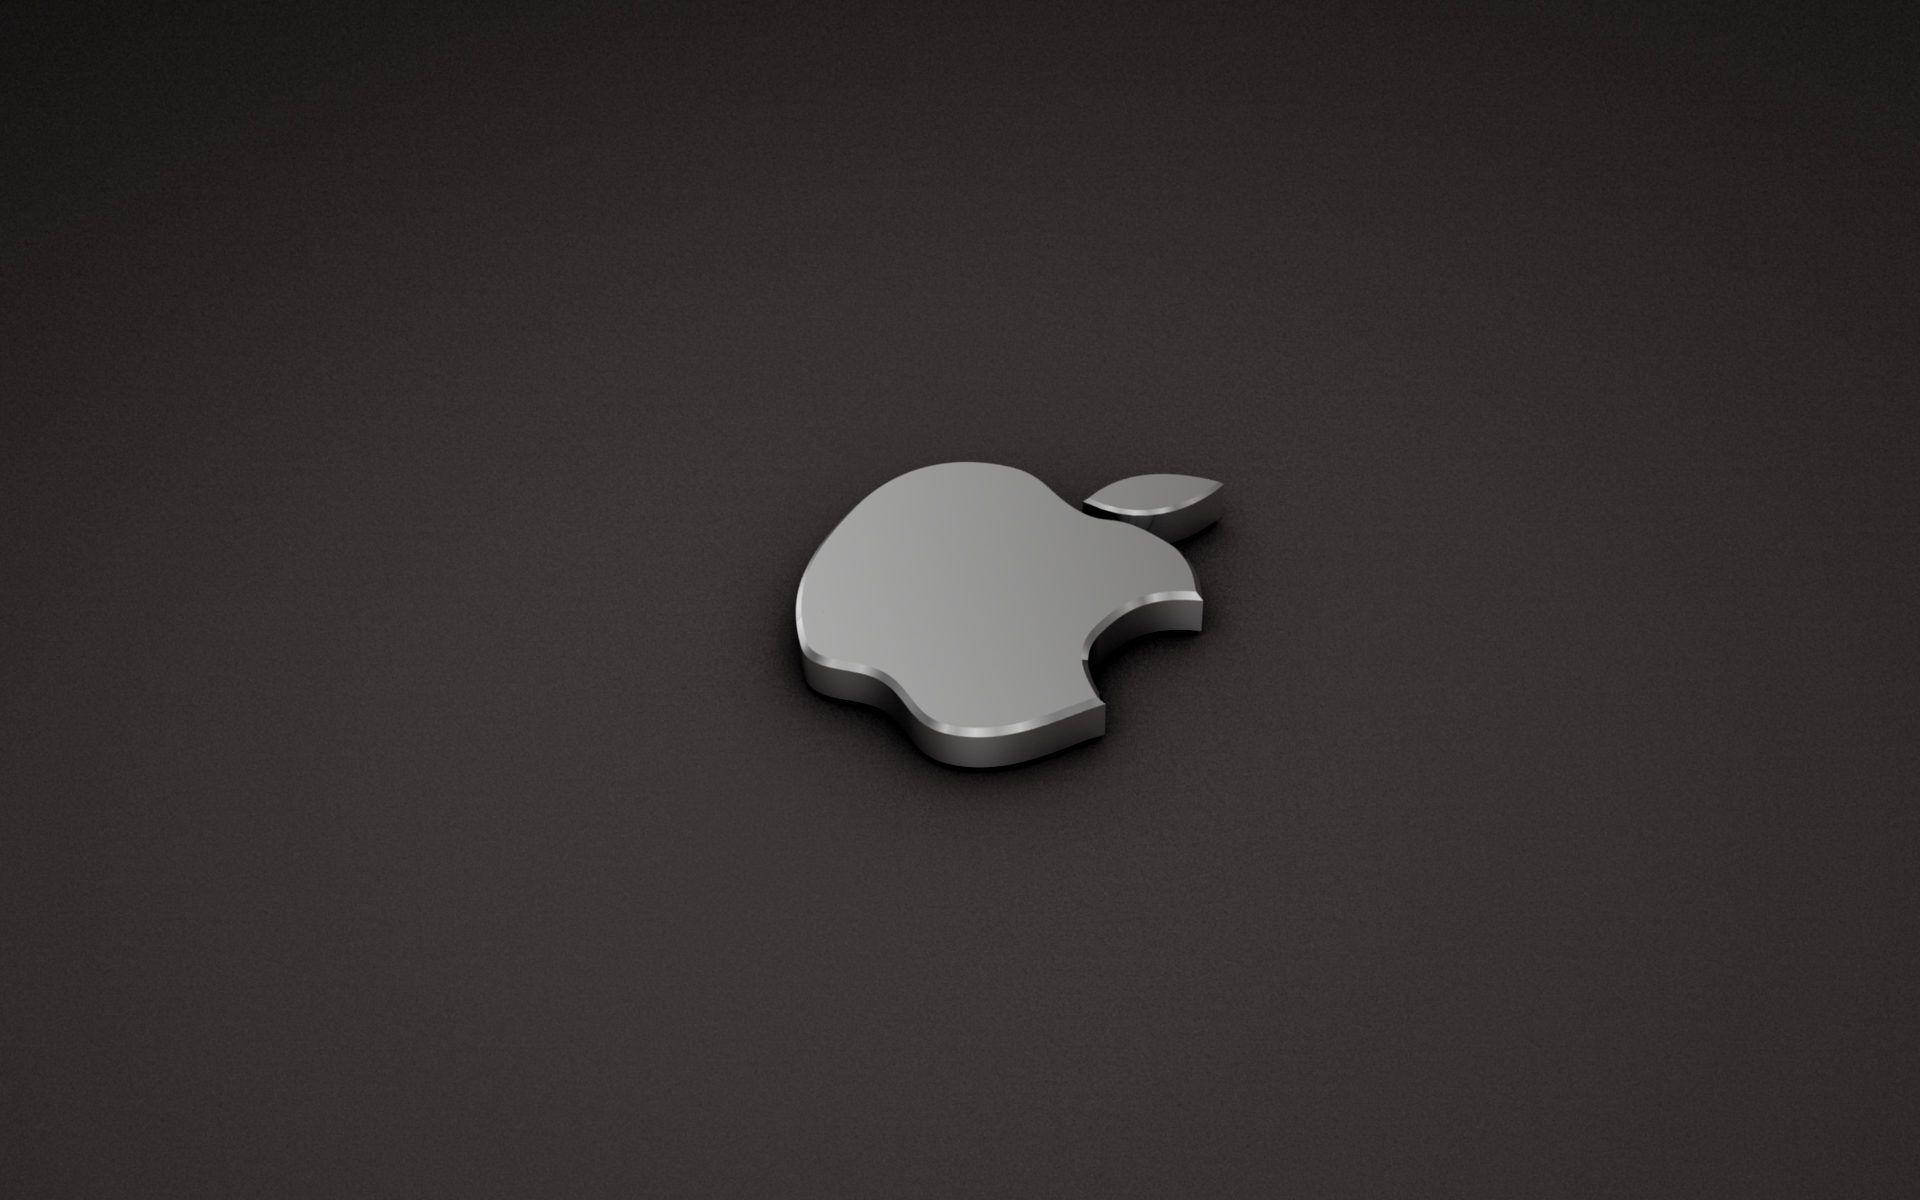 Silver 3d Apple Iphone Logo Lying Down